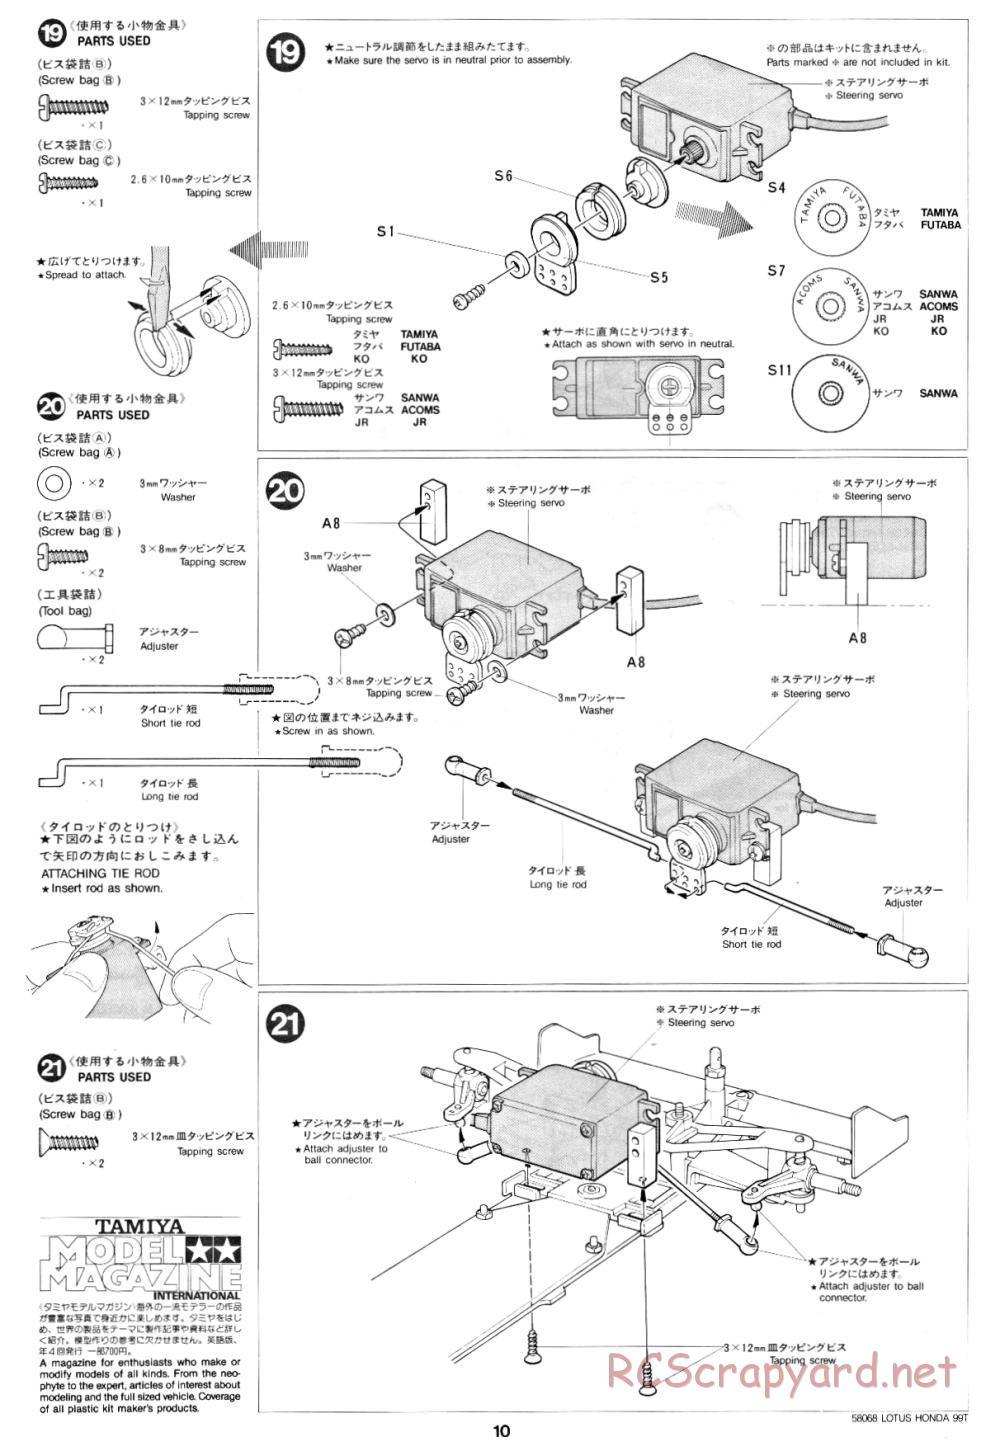 Tamiya - Lotus Honda 99T - 58068 - Manual - Page 10